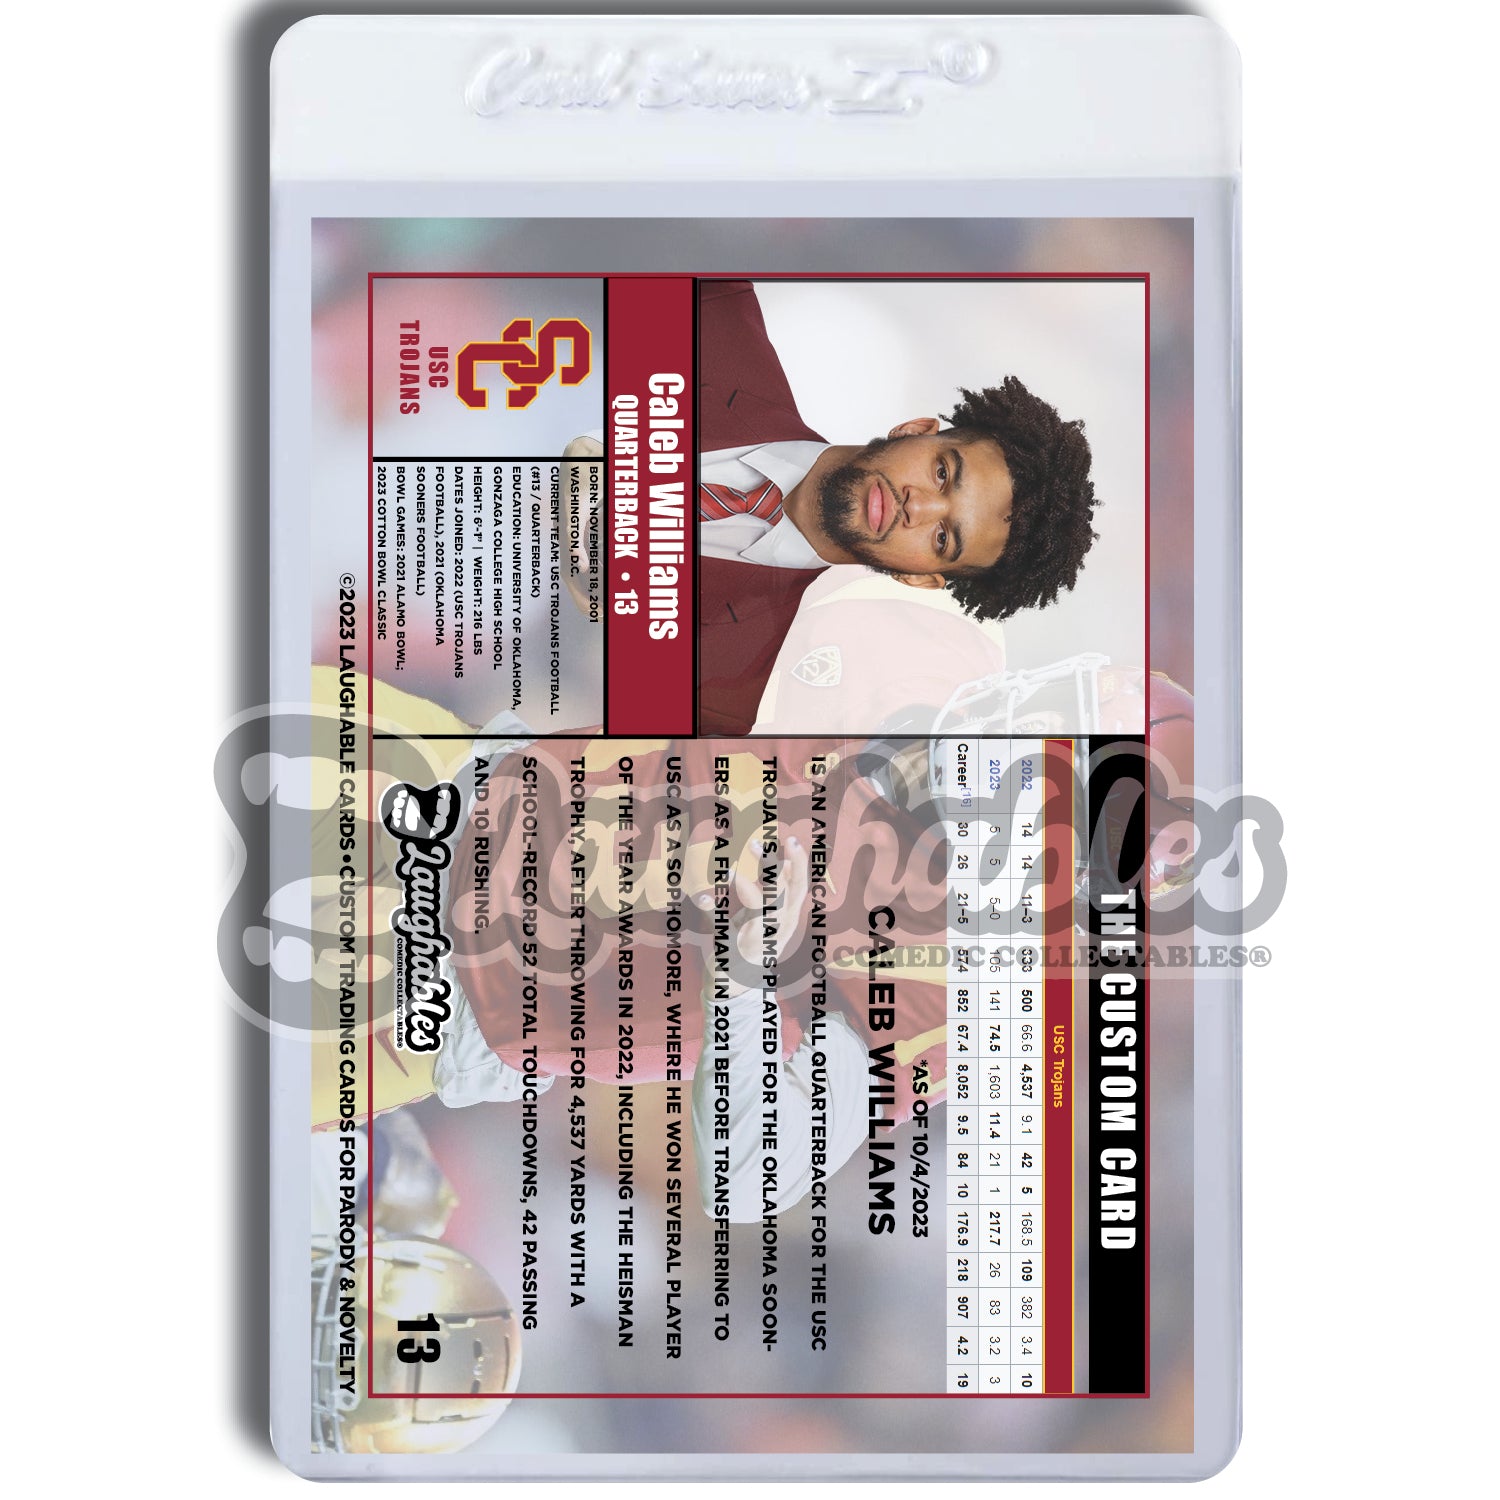 Caleb Williams | USC Trojans | Limited Custom Art Trading Football Card Novelty